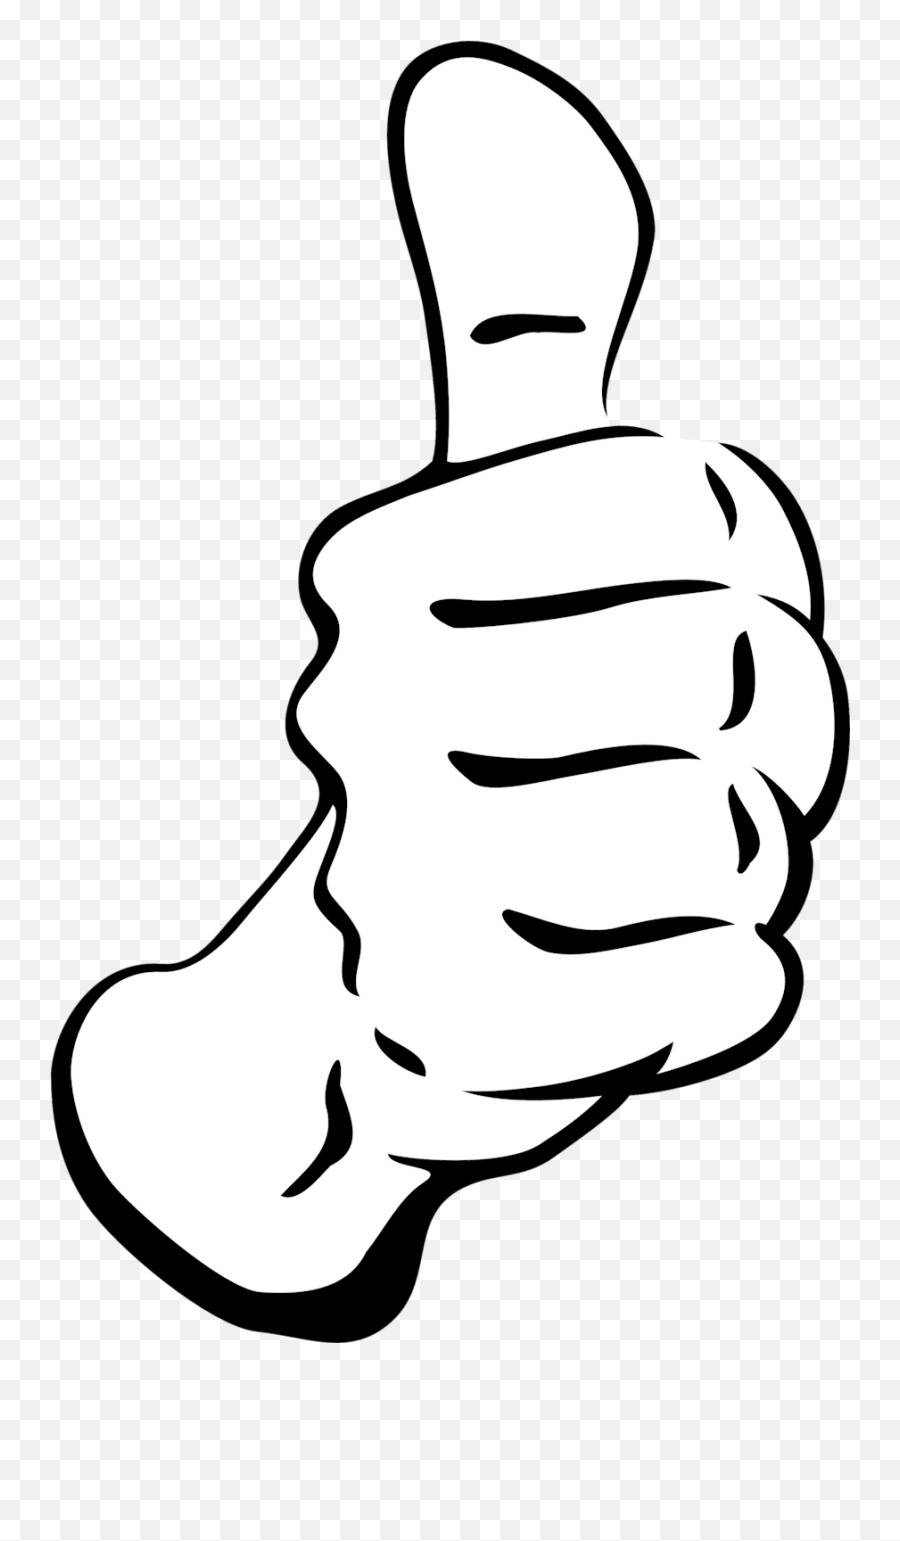 Free Thumbs Up Image Download Free Clip Art Free Clip Art - Thumbs Up Outline Clipart Emoji,Thumbs Up Emoji Copy Paste